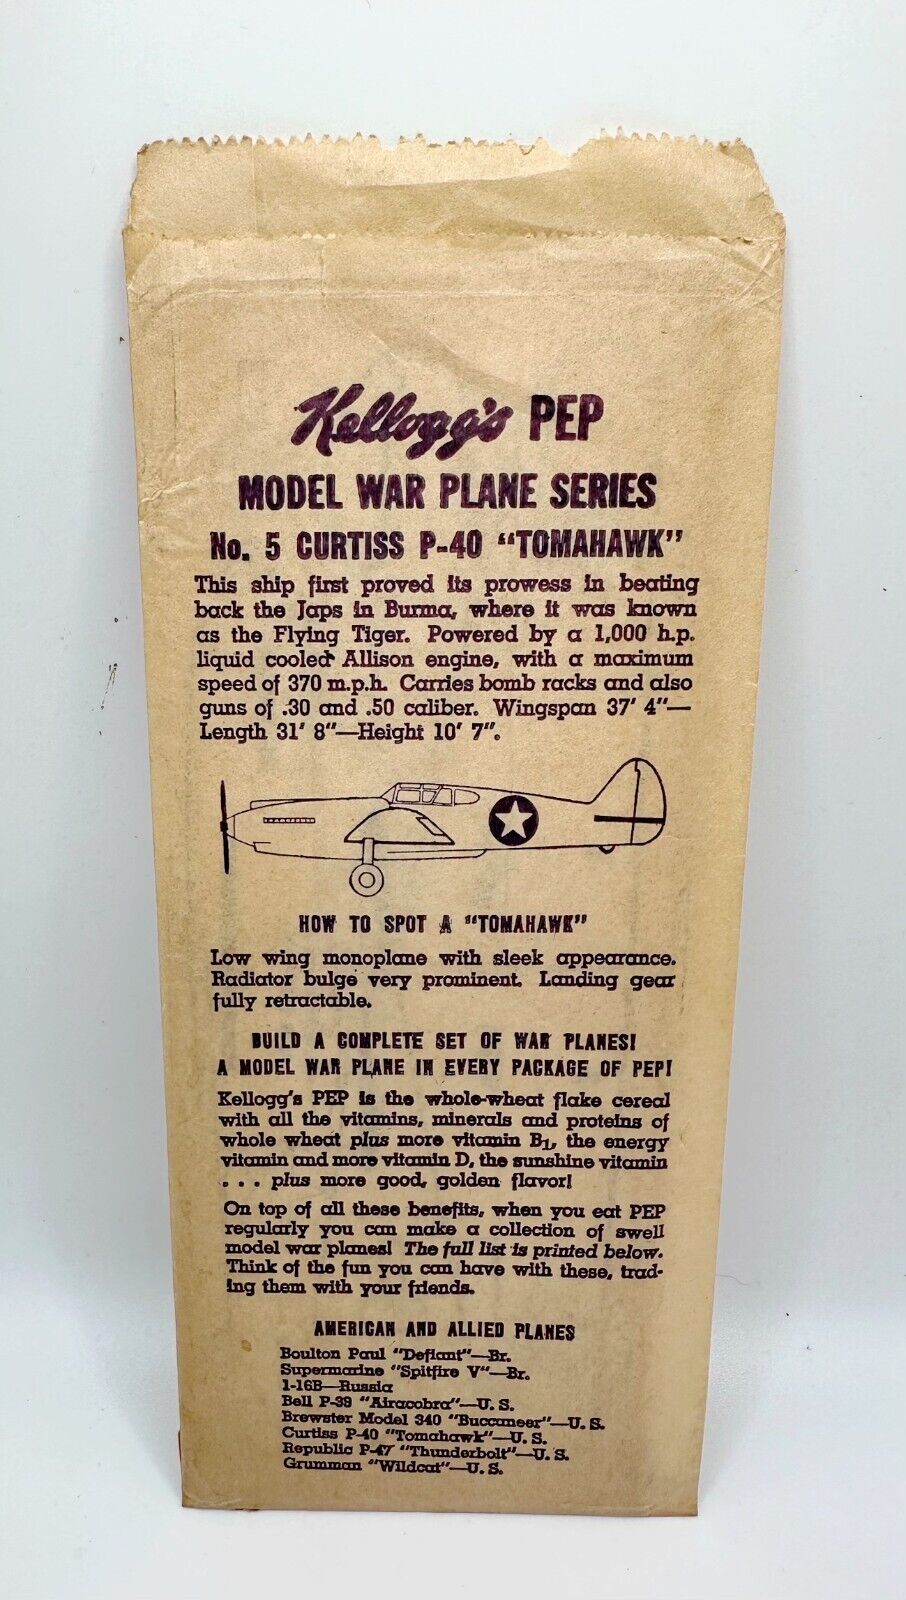 1940s Kellogg's Pep Cereal Model War Plane Series - No. 3 Curtiss P-40 Tomahawk